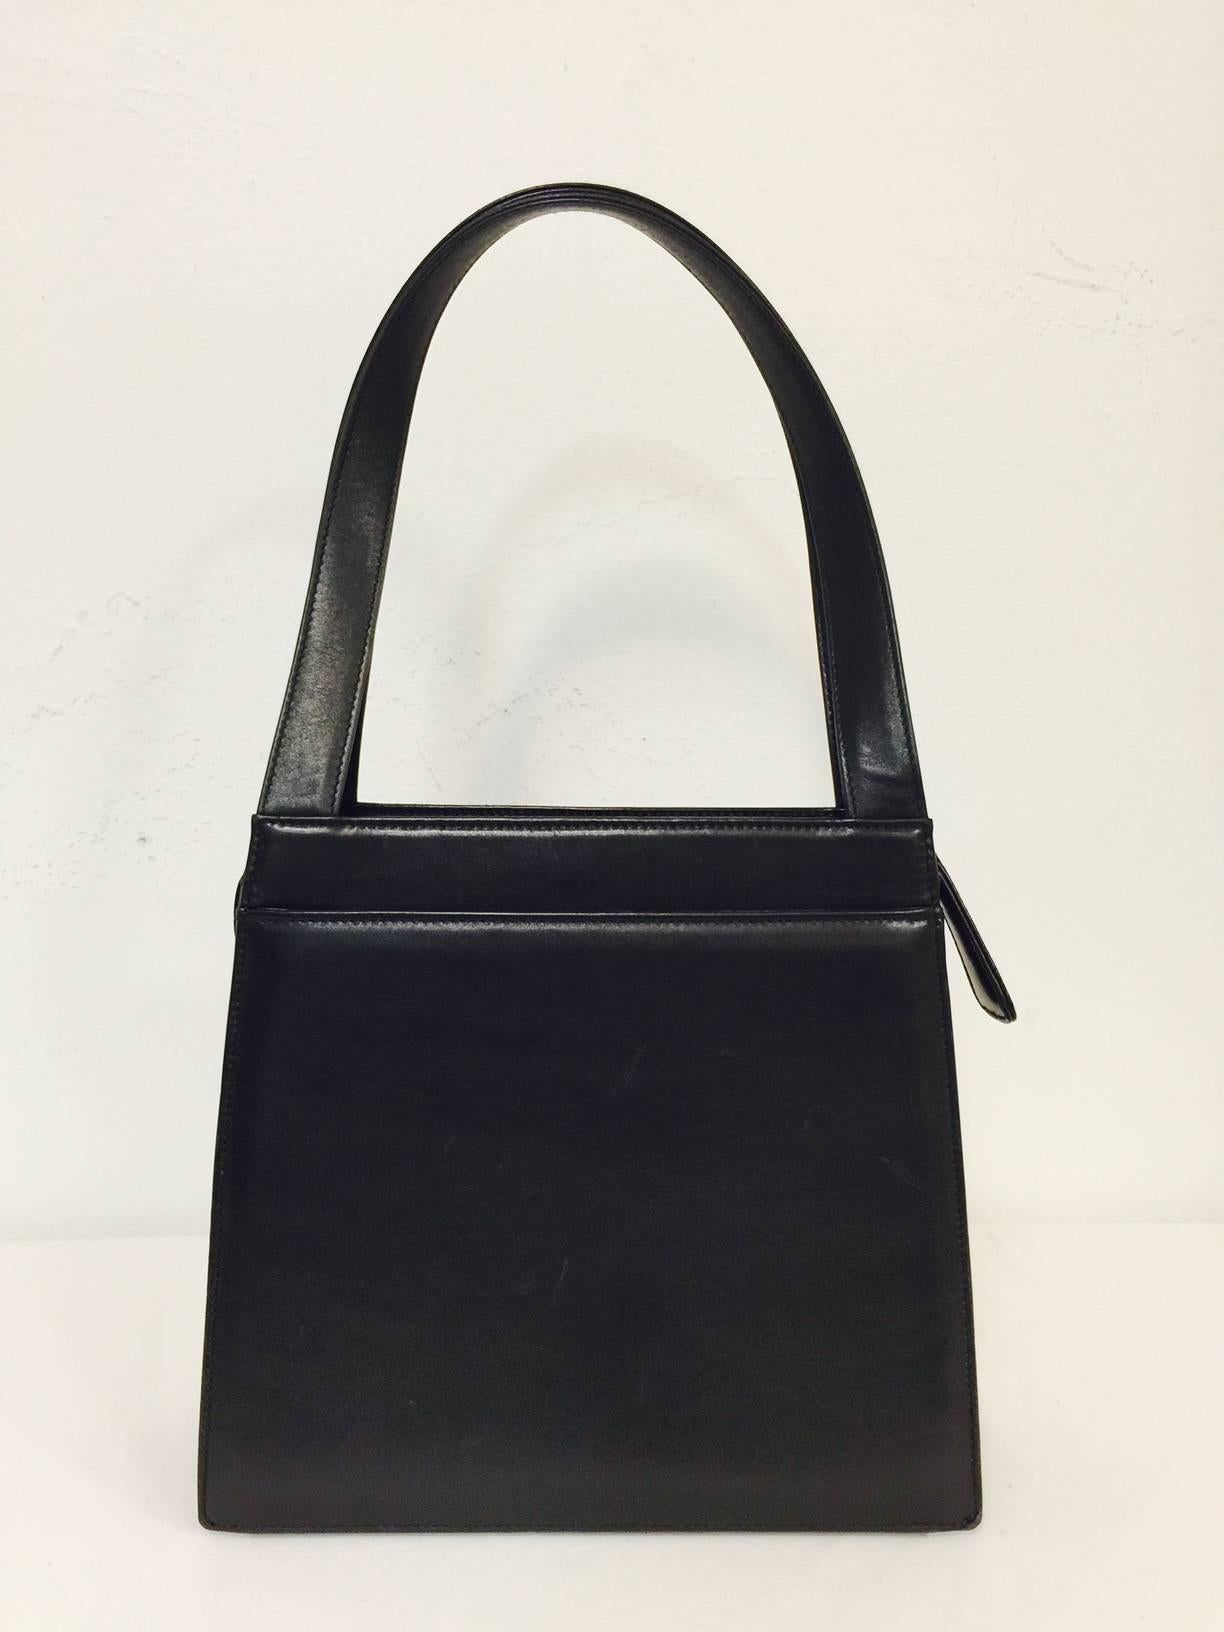 Women's Chanel Black Smooth Lambskin Structured Shoulder Bag